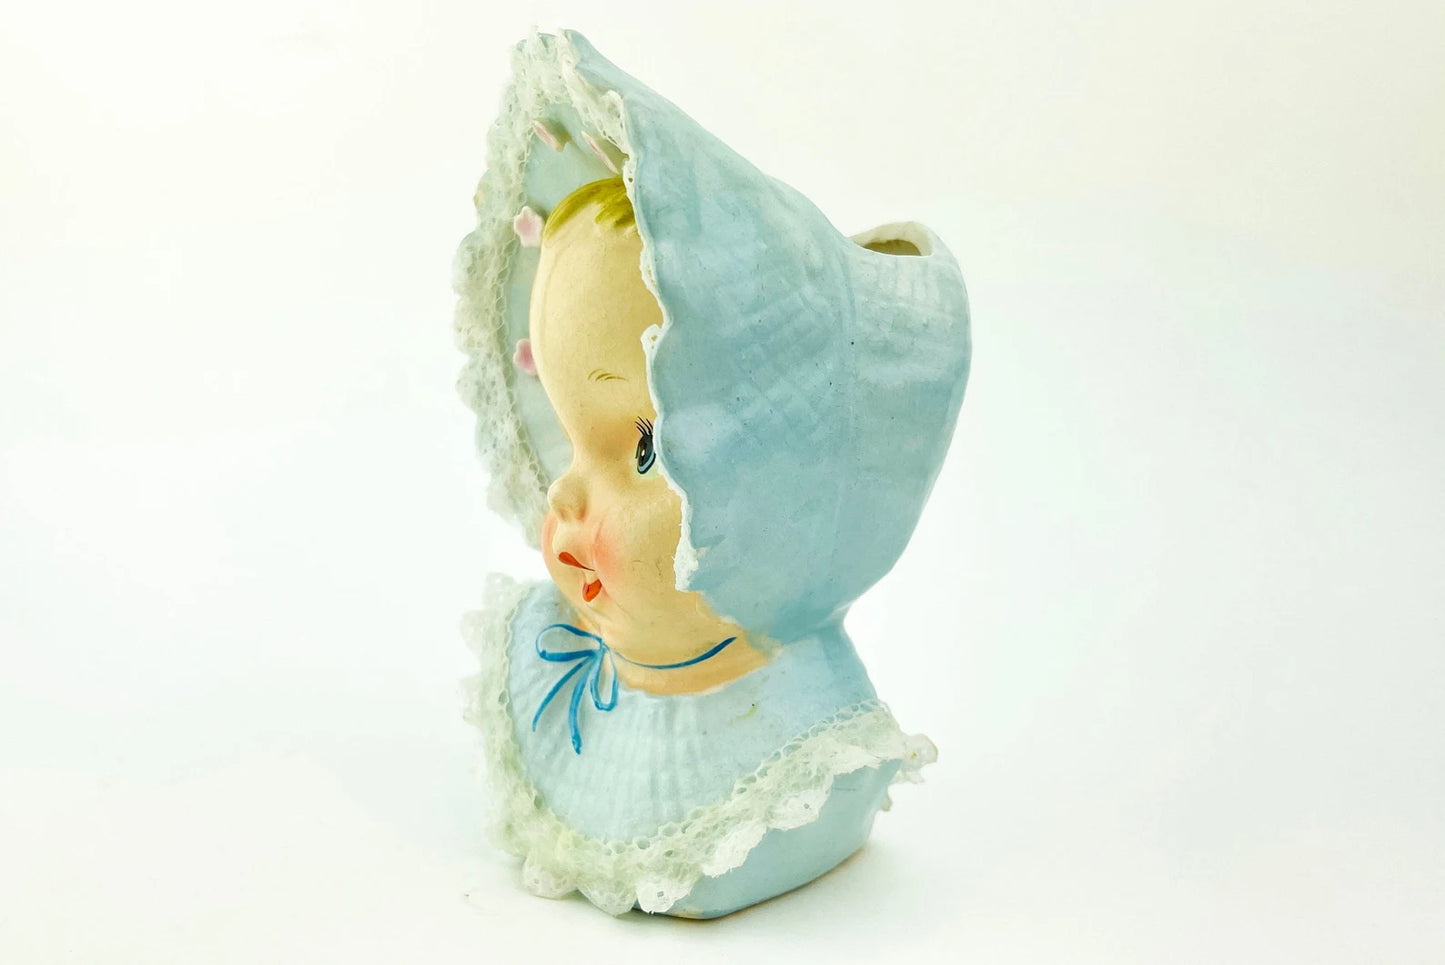 Vintage Blue Baby Ceramic Head Vase, Flower buds on Pink Bonnet, Whimsical Planter, Mid Century Kitschy Nursery Decor UCAGO Japan